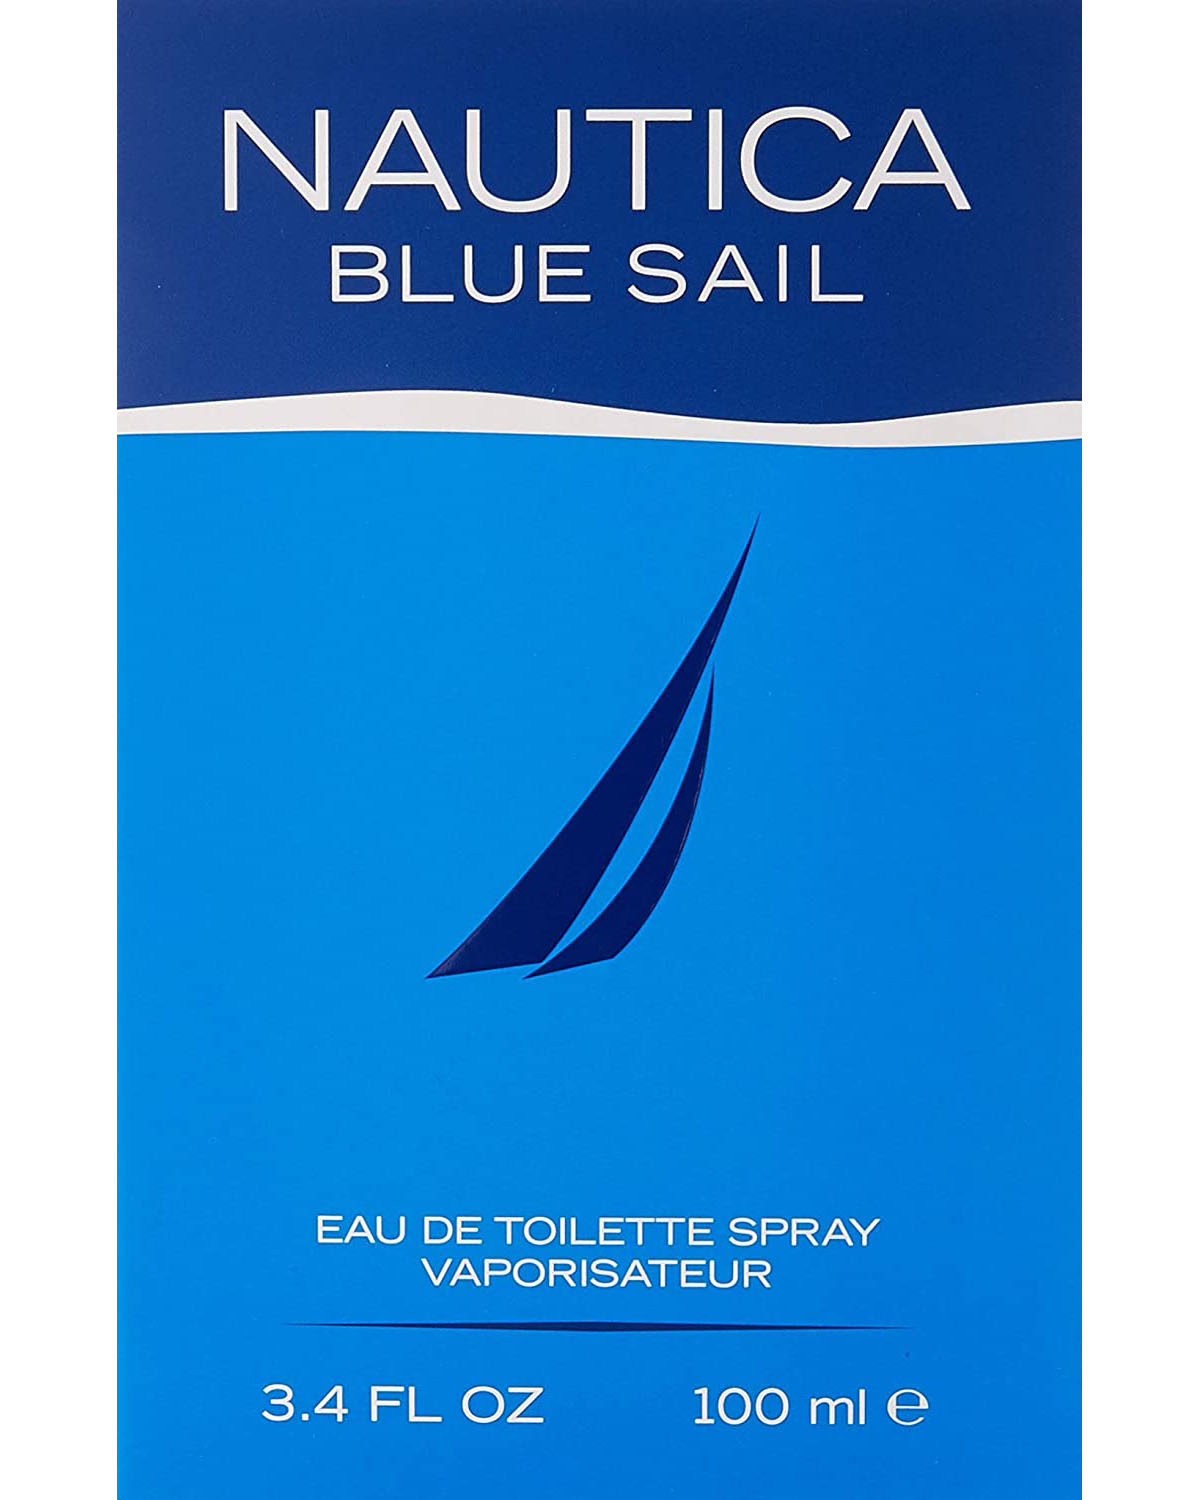 Nautica Blue Sail 100ml EDT Spray